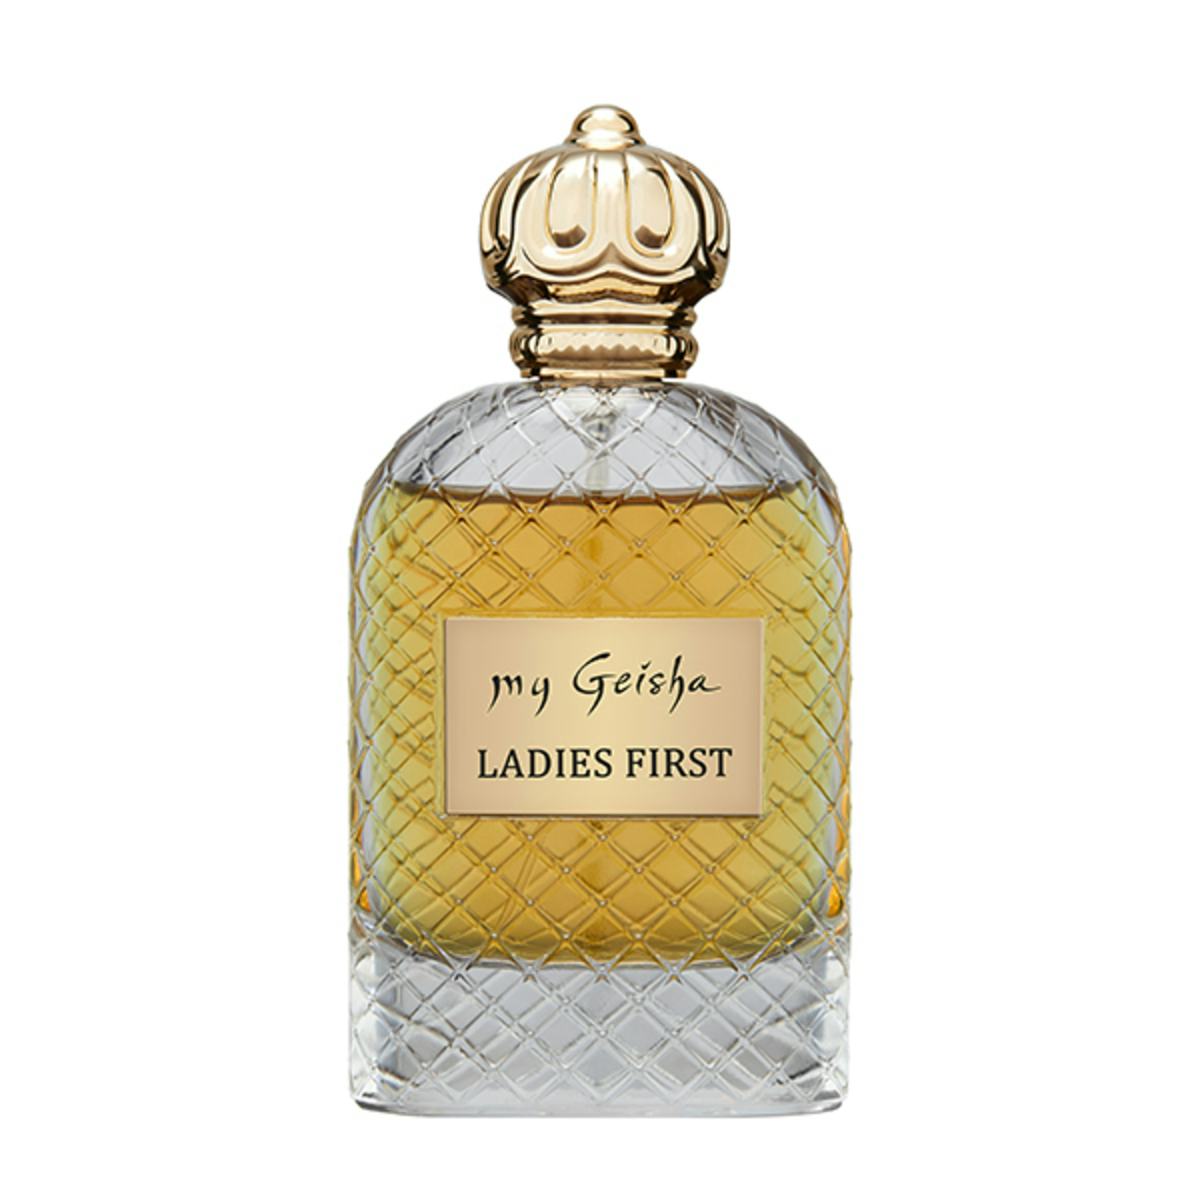 Extrait de parfum "Ladies First" 100 ml, My Geisha Genève, Genève, image 1 | Mimelis